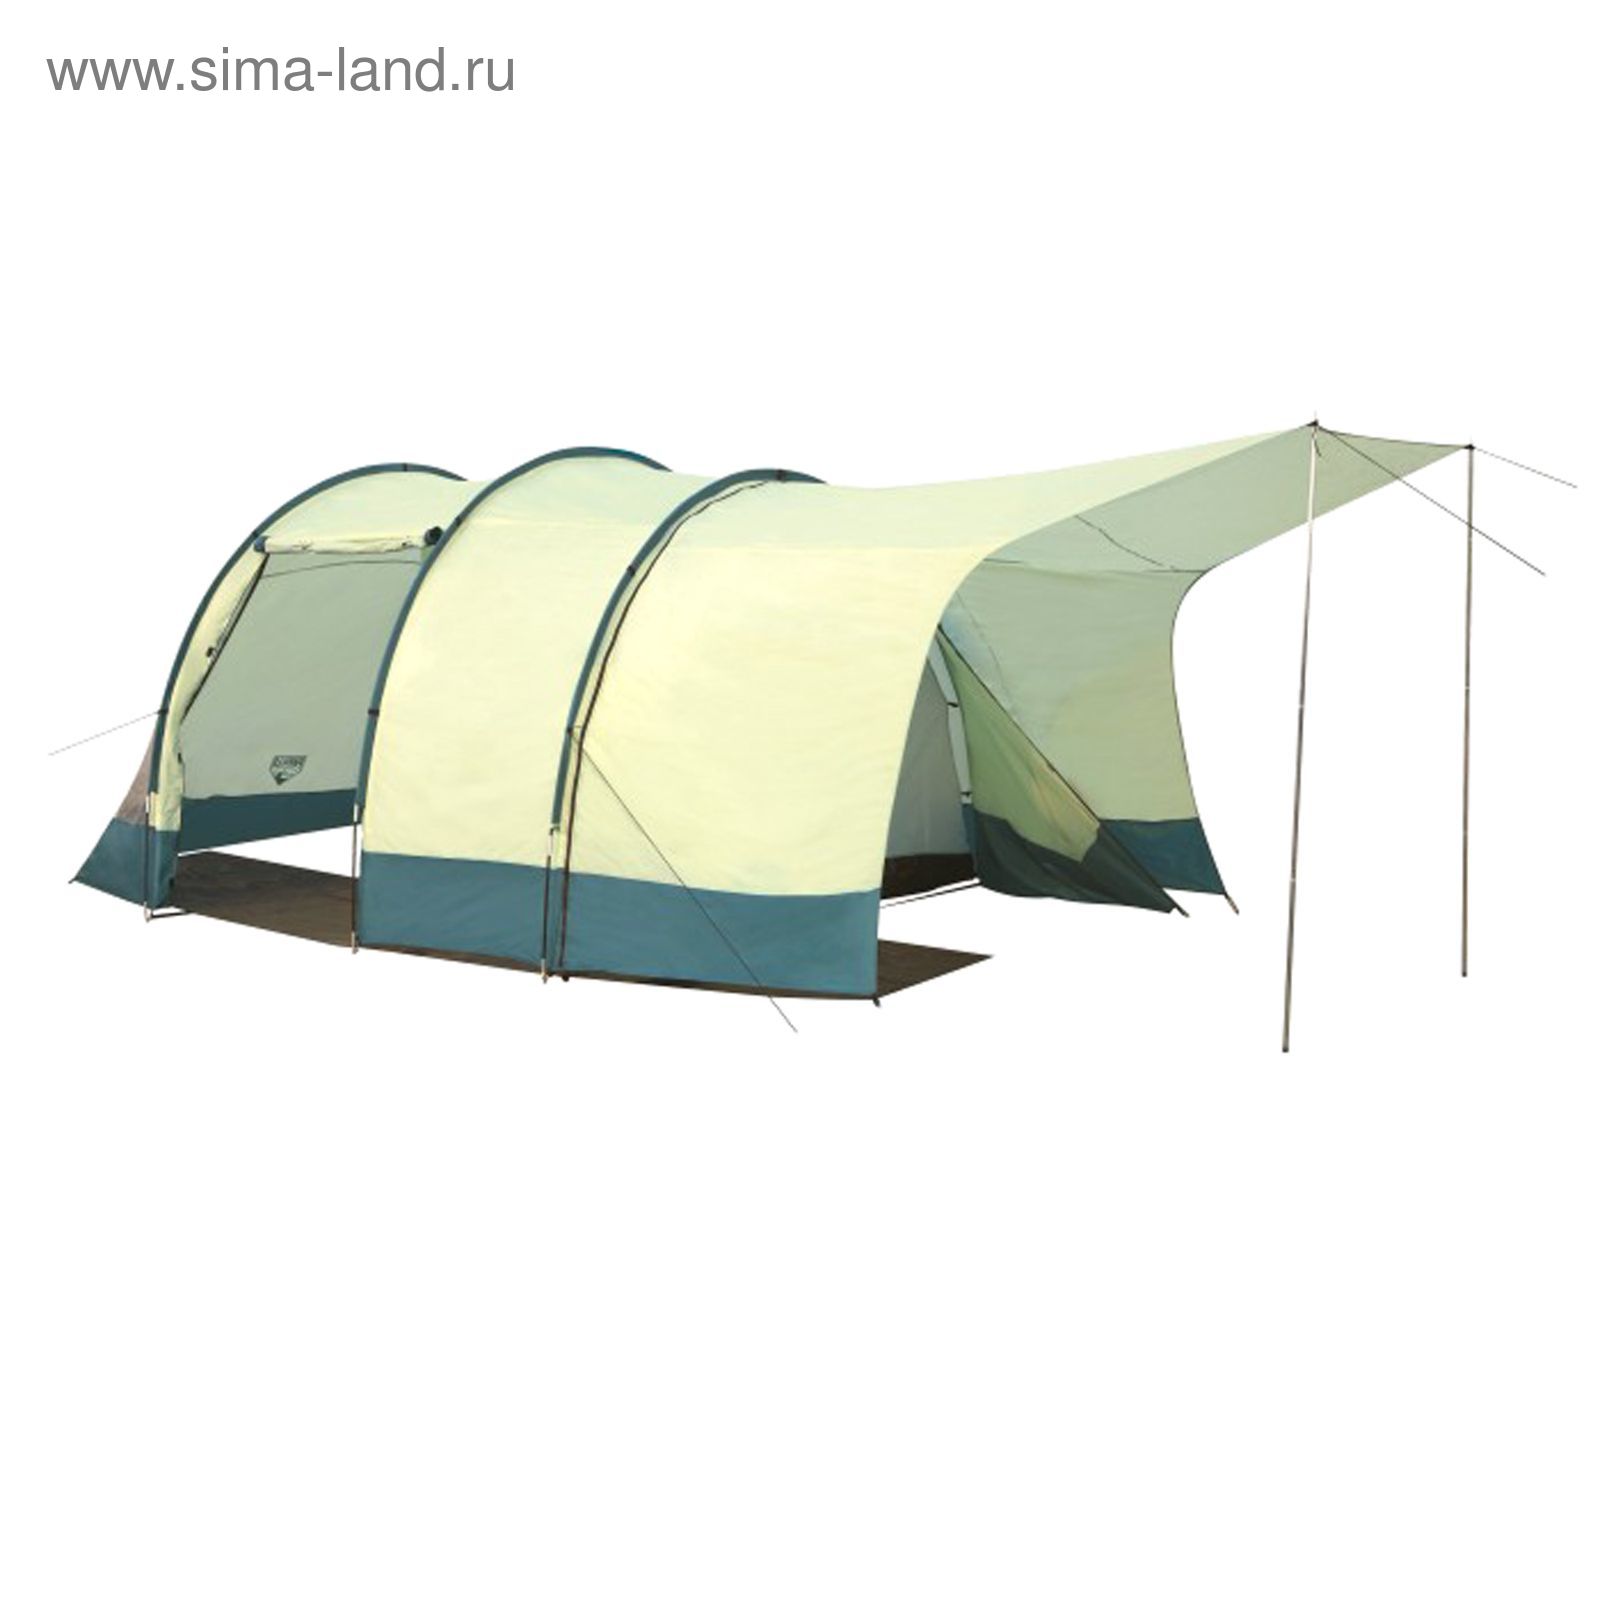 Палатка TripTrek 4-местная (135+220+135)х280х200см 68013